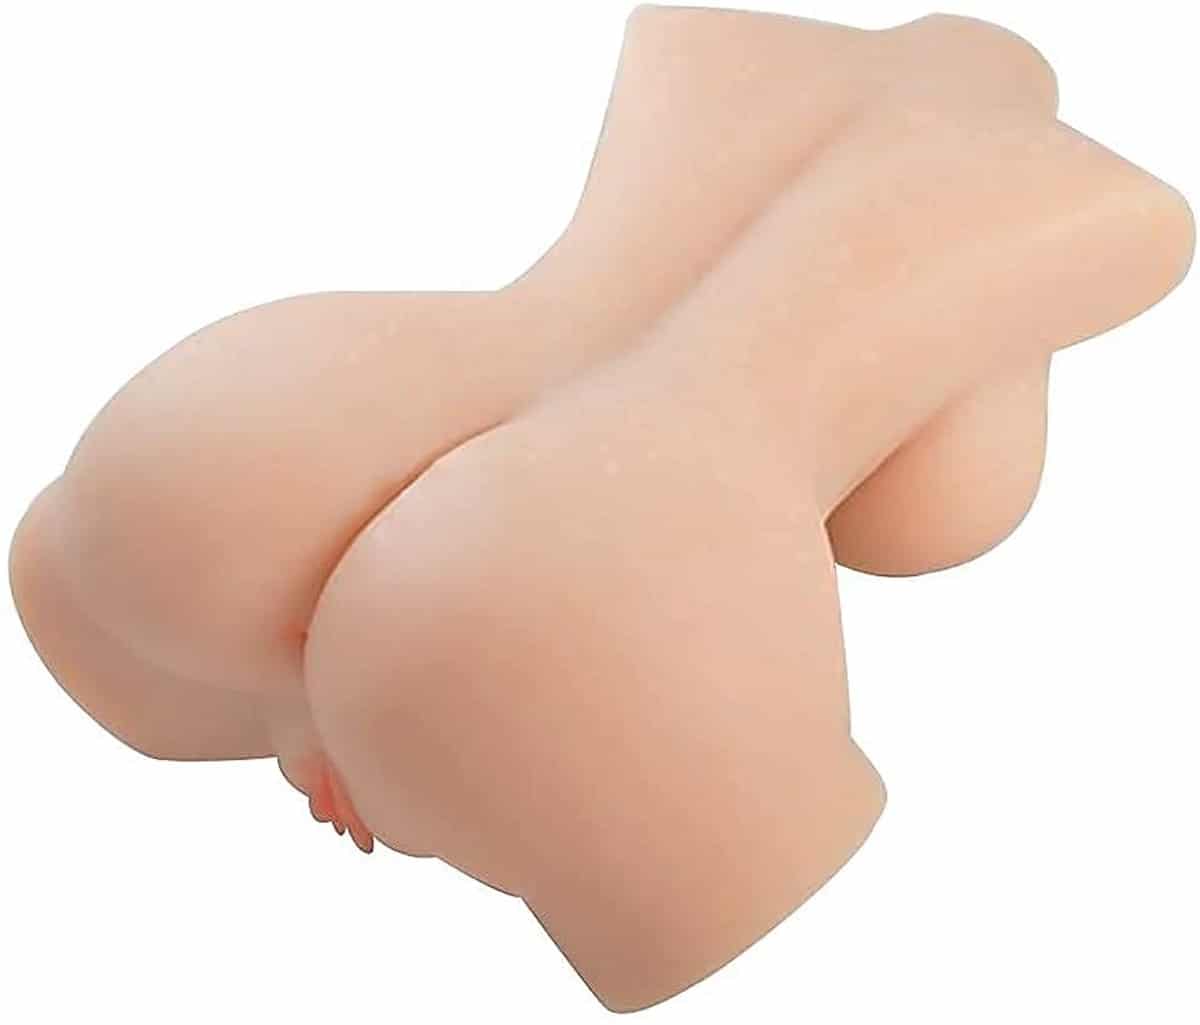 SexBaby vagina and boobs sex doll